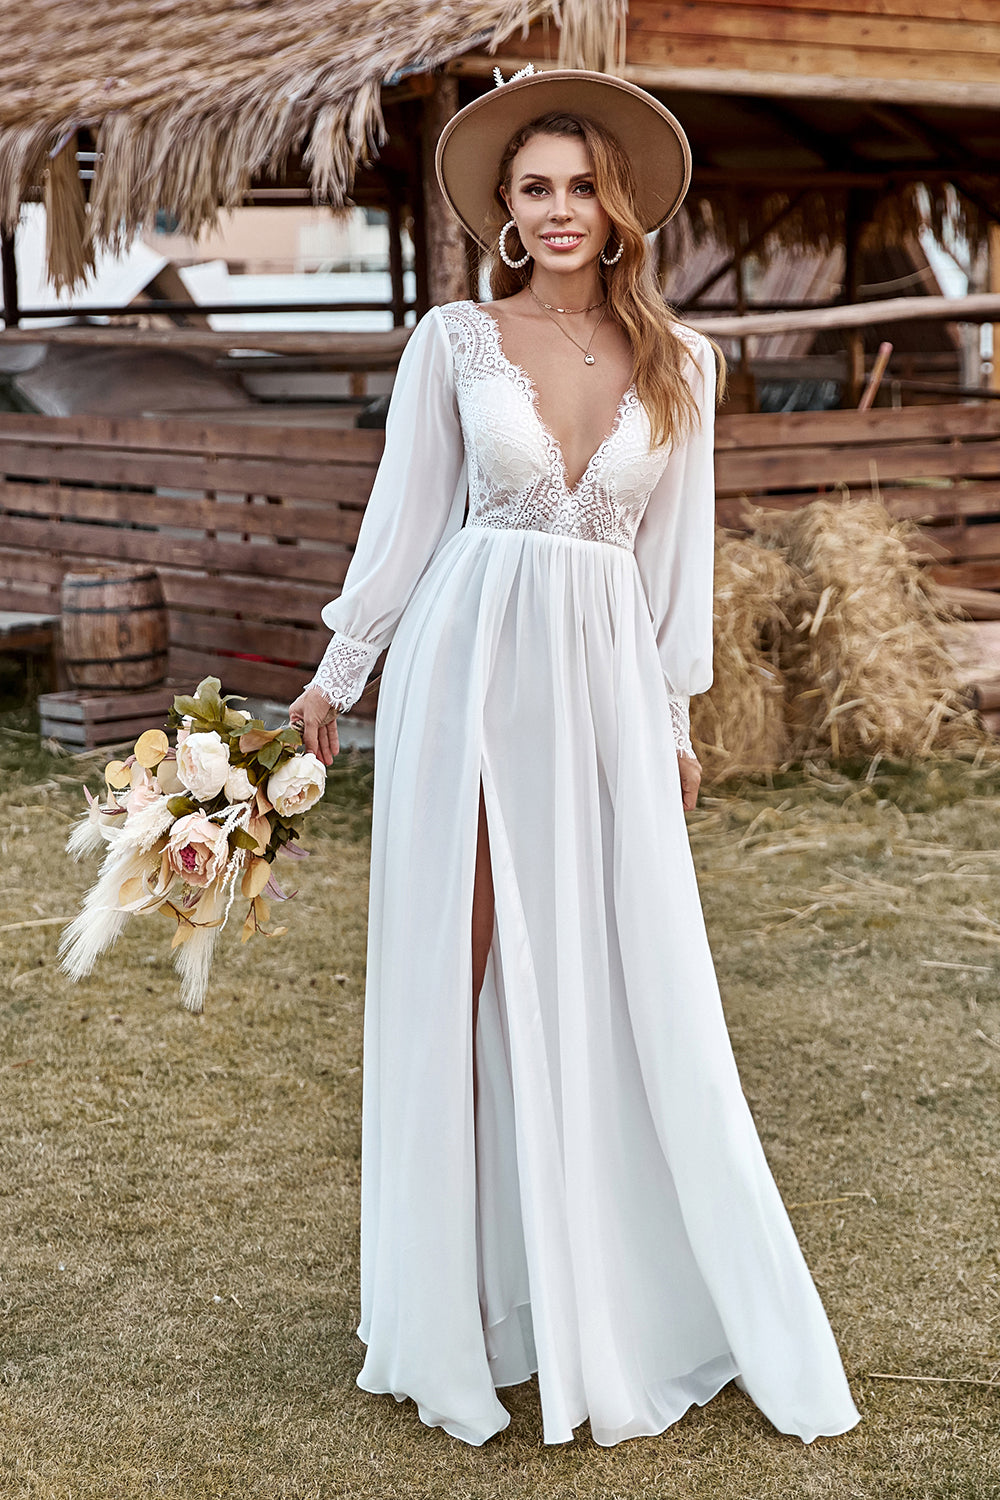 Ivory Lace Sheath Sweetheart Neck Boho Beach Wedding Dresses TN124